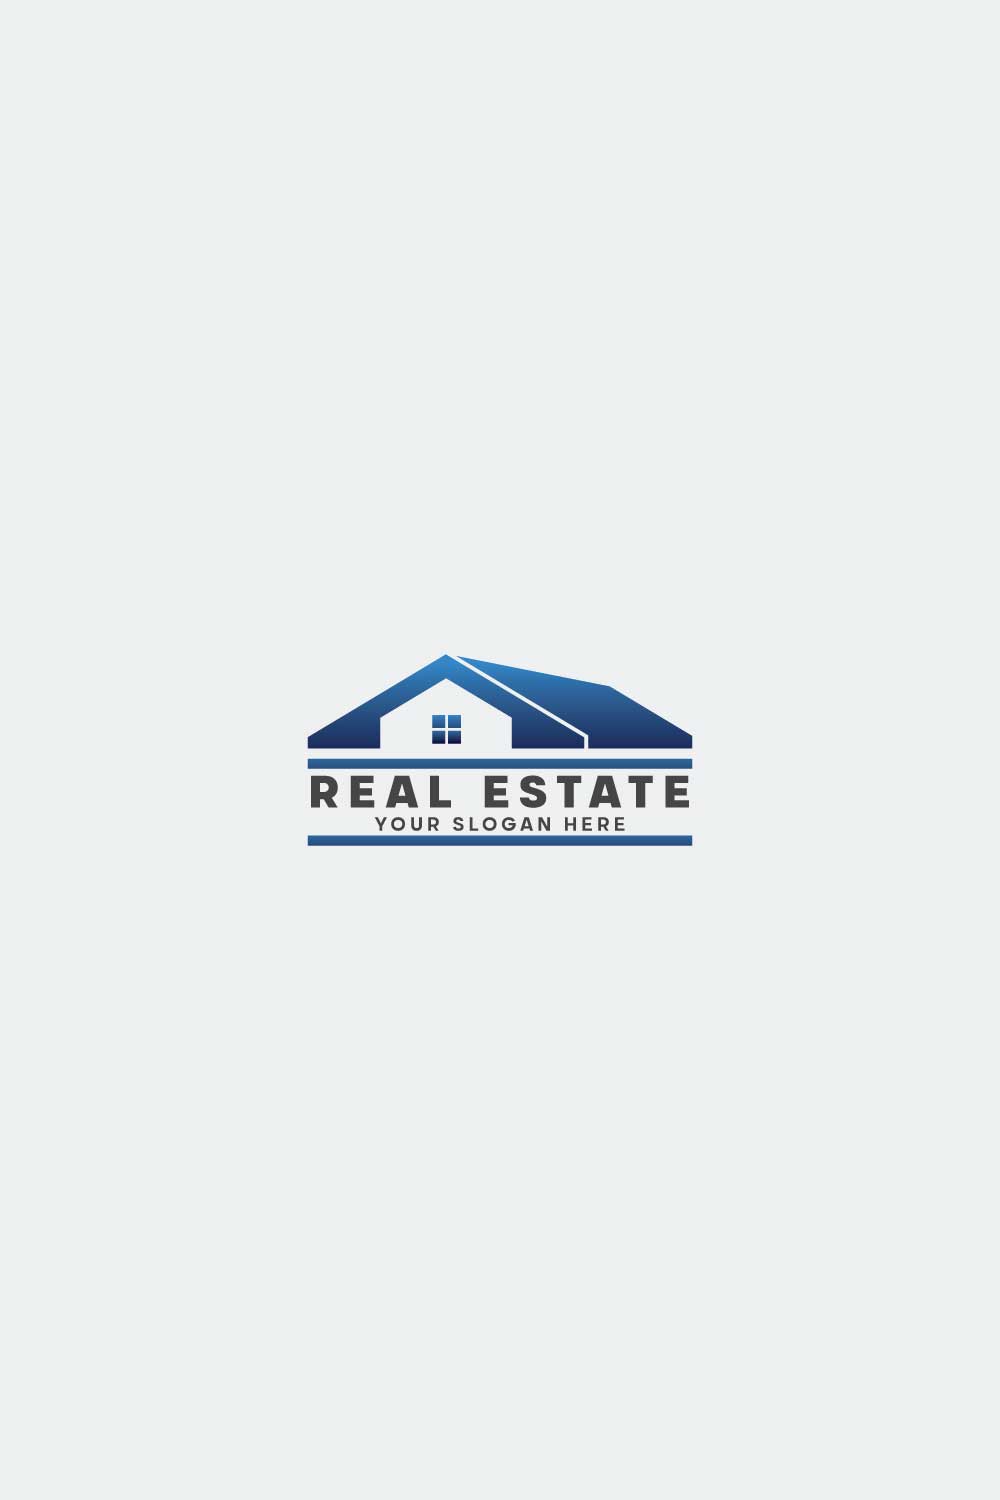 Luxury Real Estate Logo pinterest image.